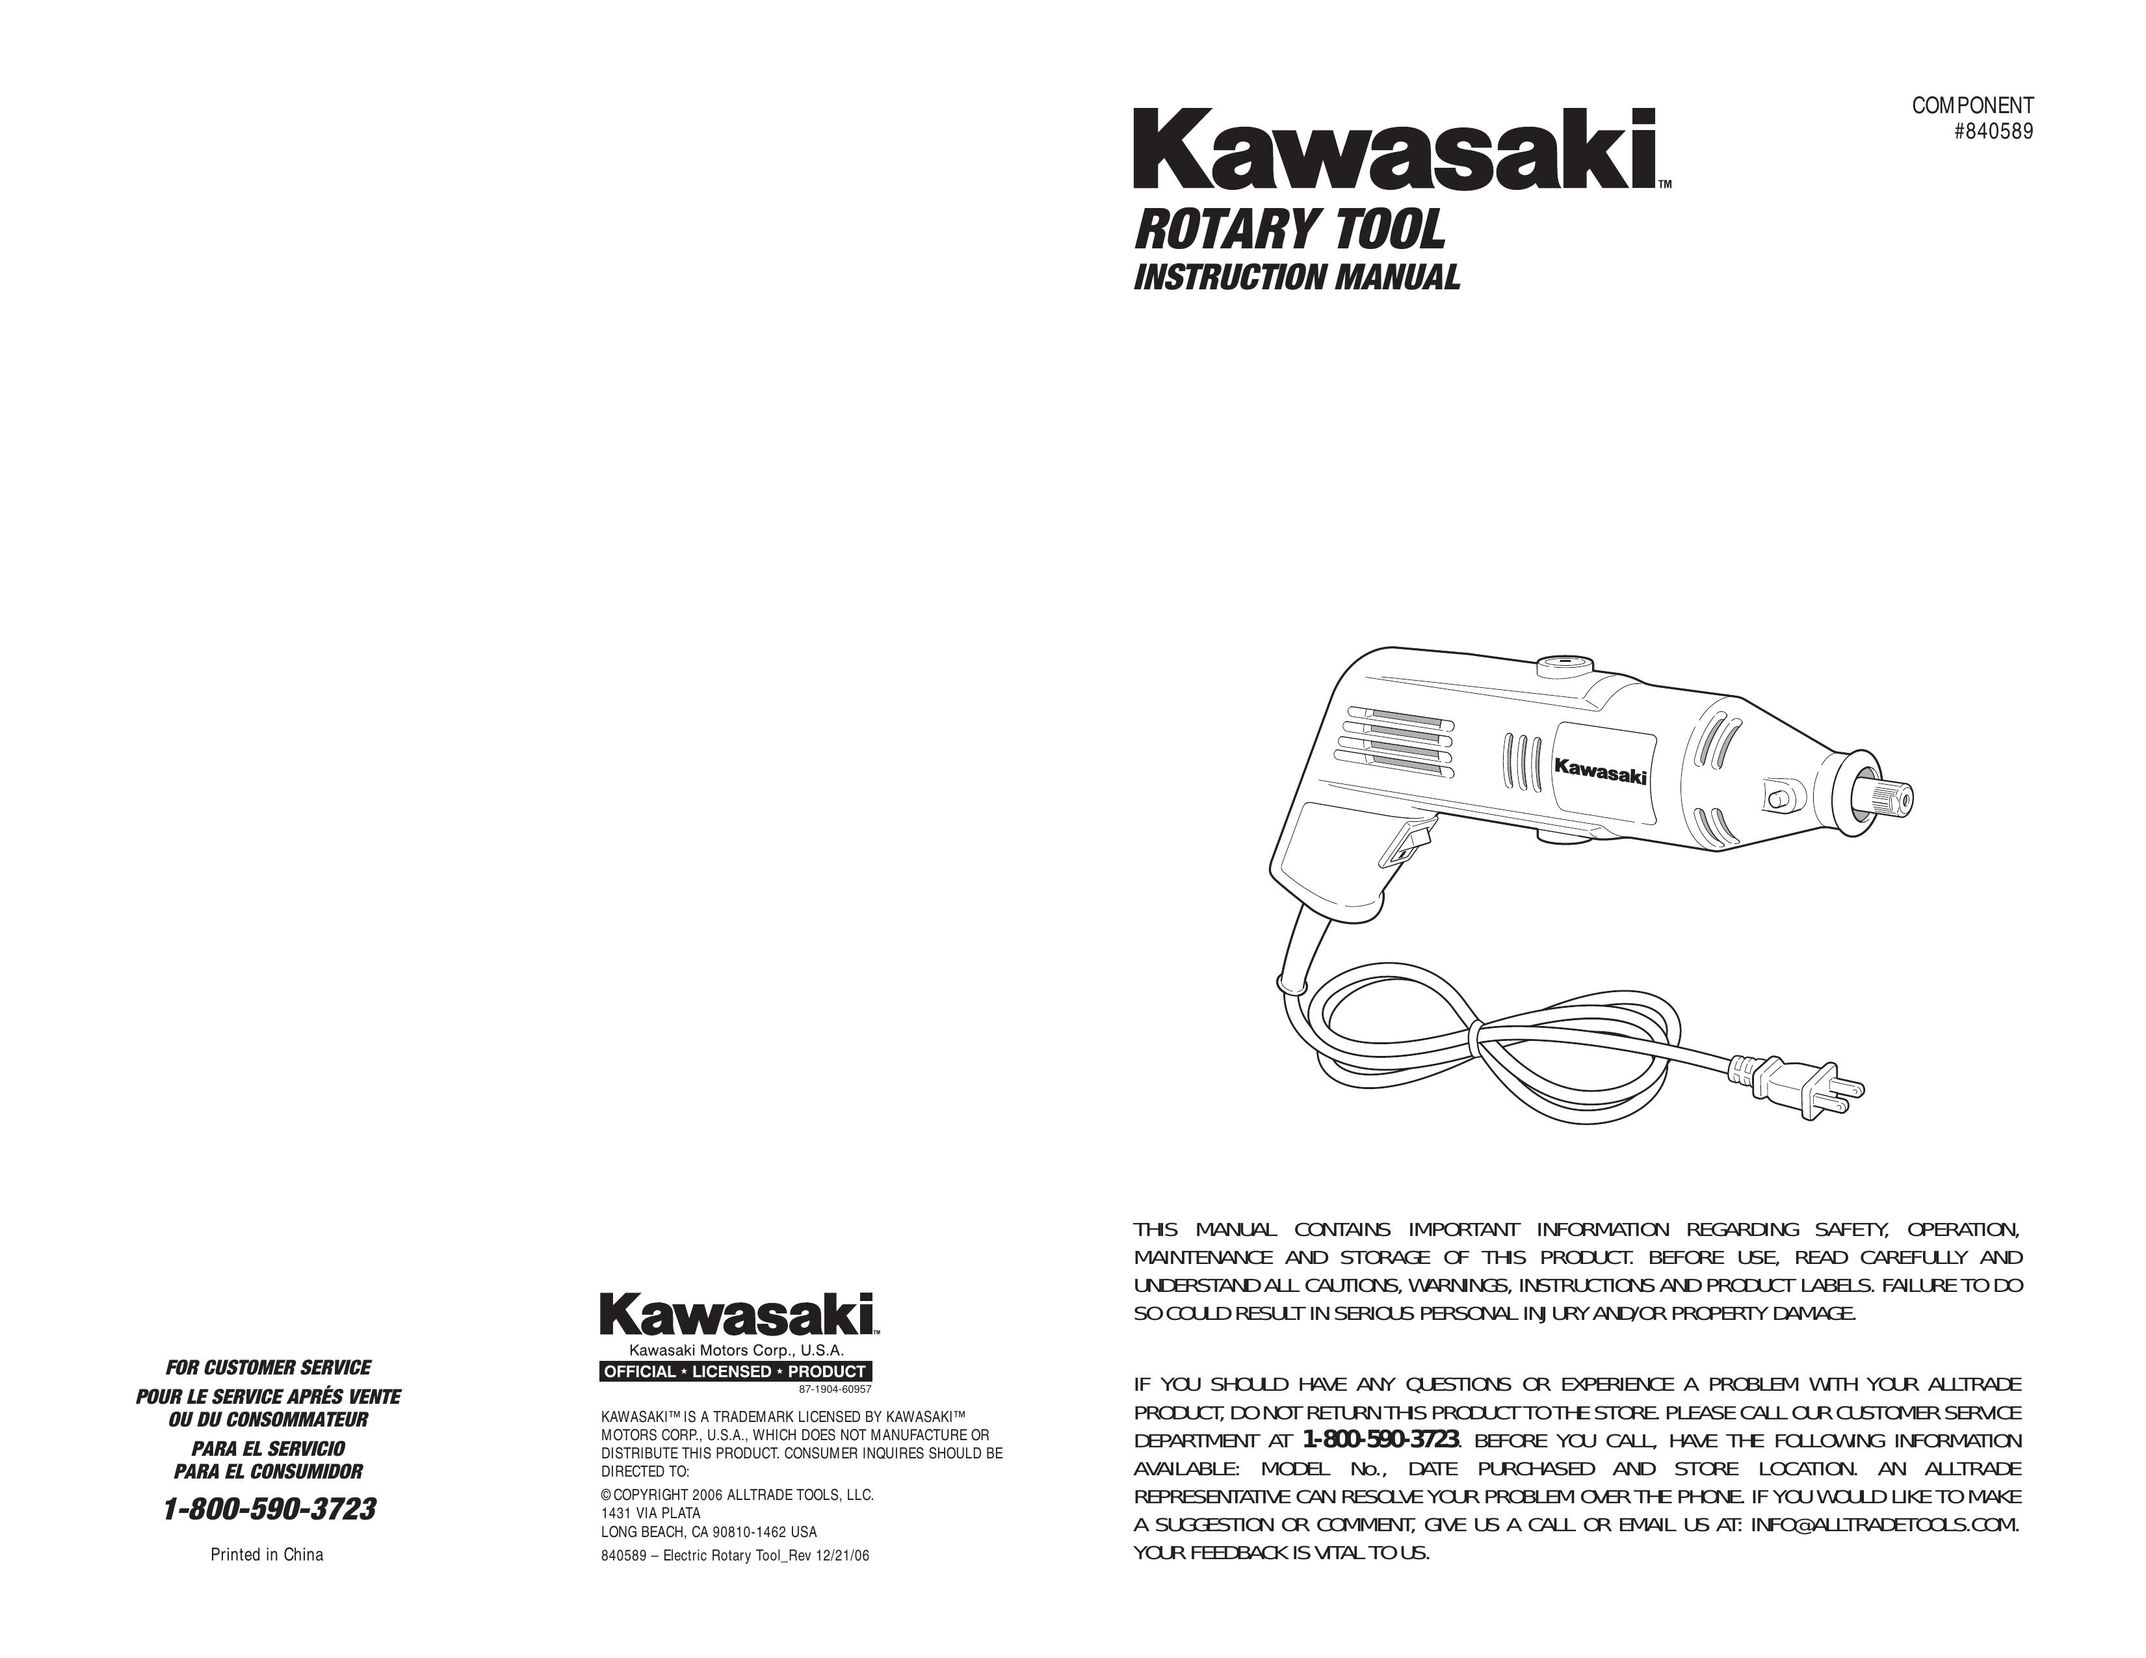 Kawasaki Rotary Tool Power Hammer User Manual